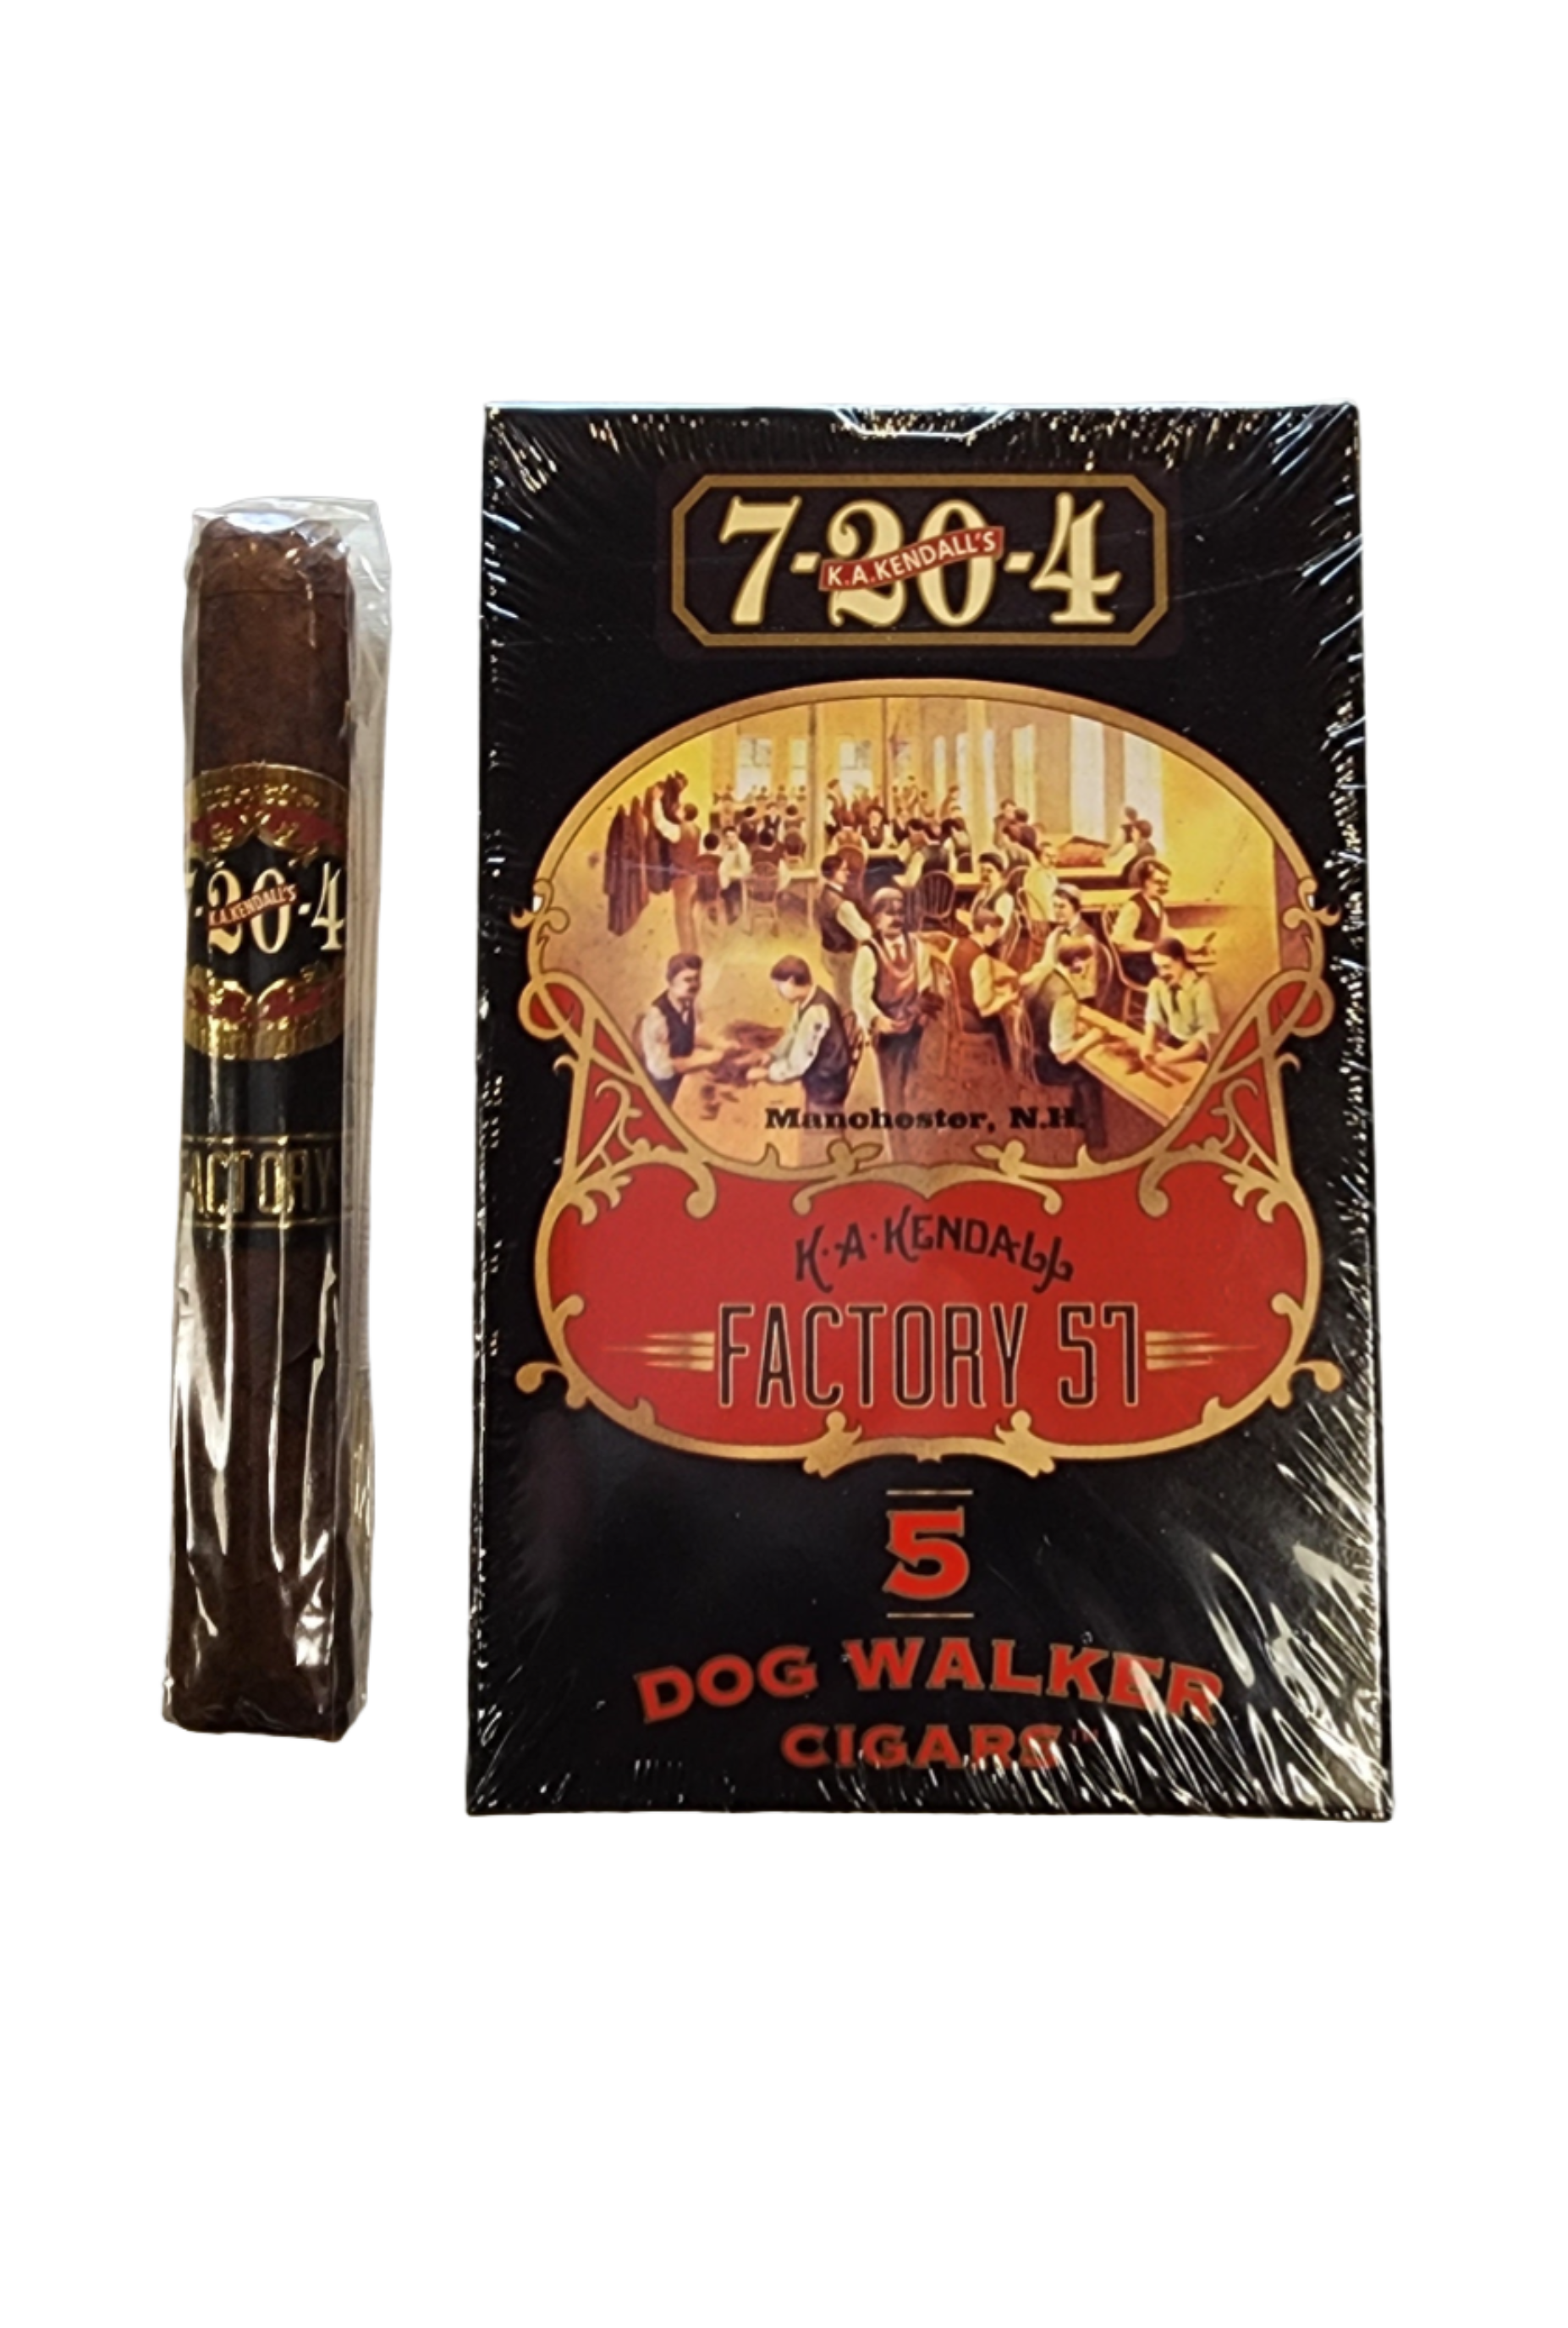 7-20-4 Dog Walker Factory 57 5PK Box